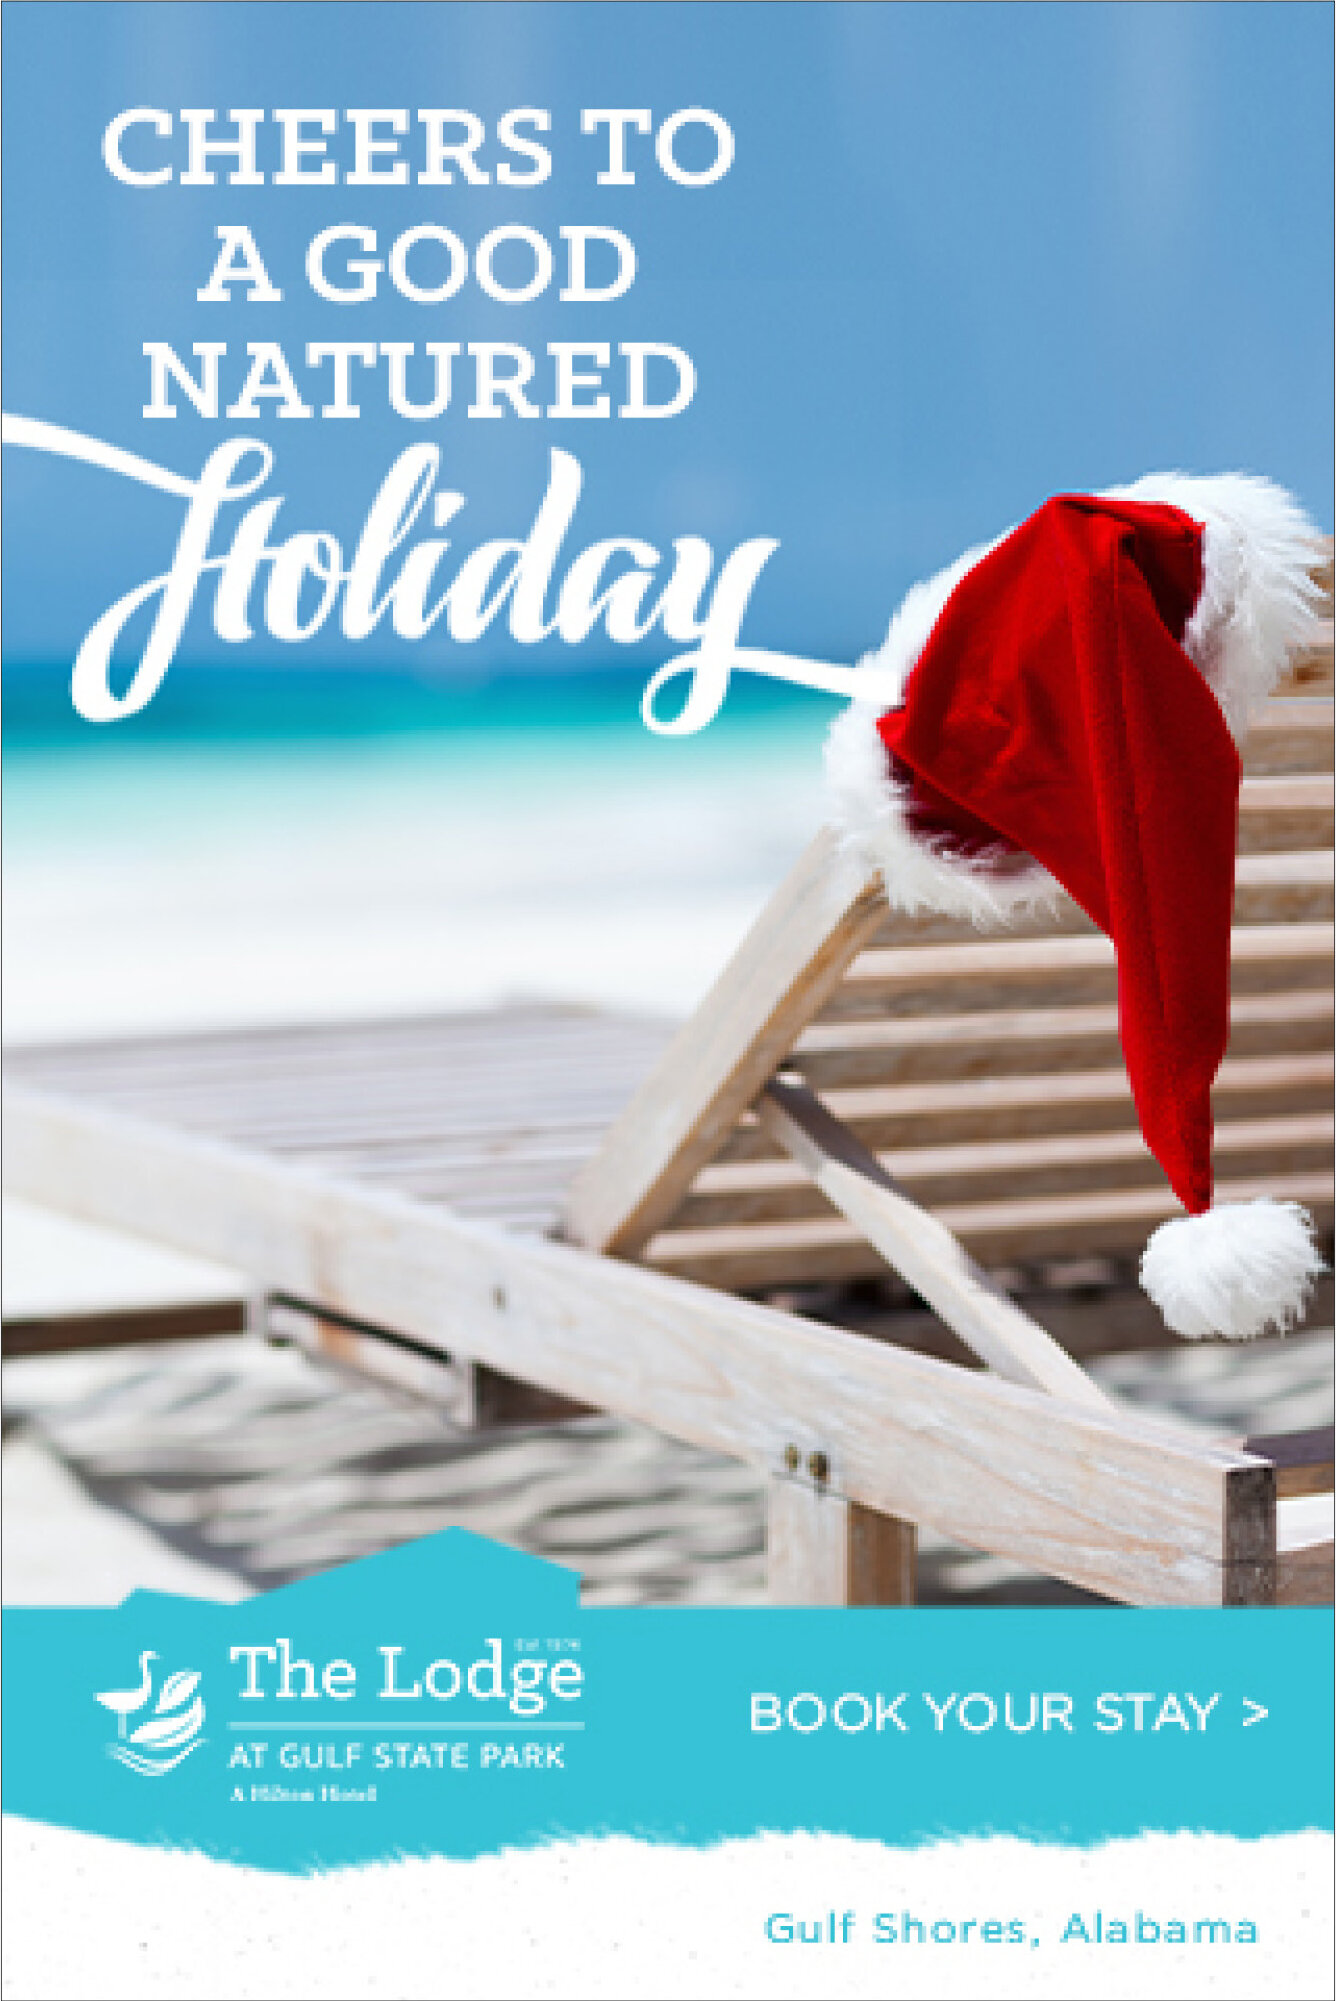 Lodge Holiday Ad.jpg